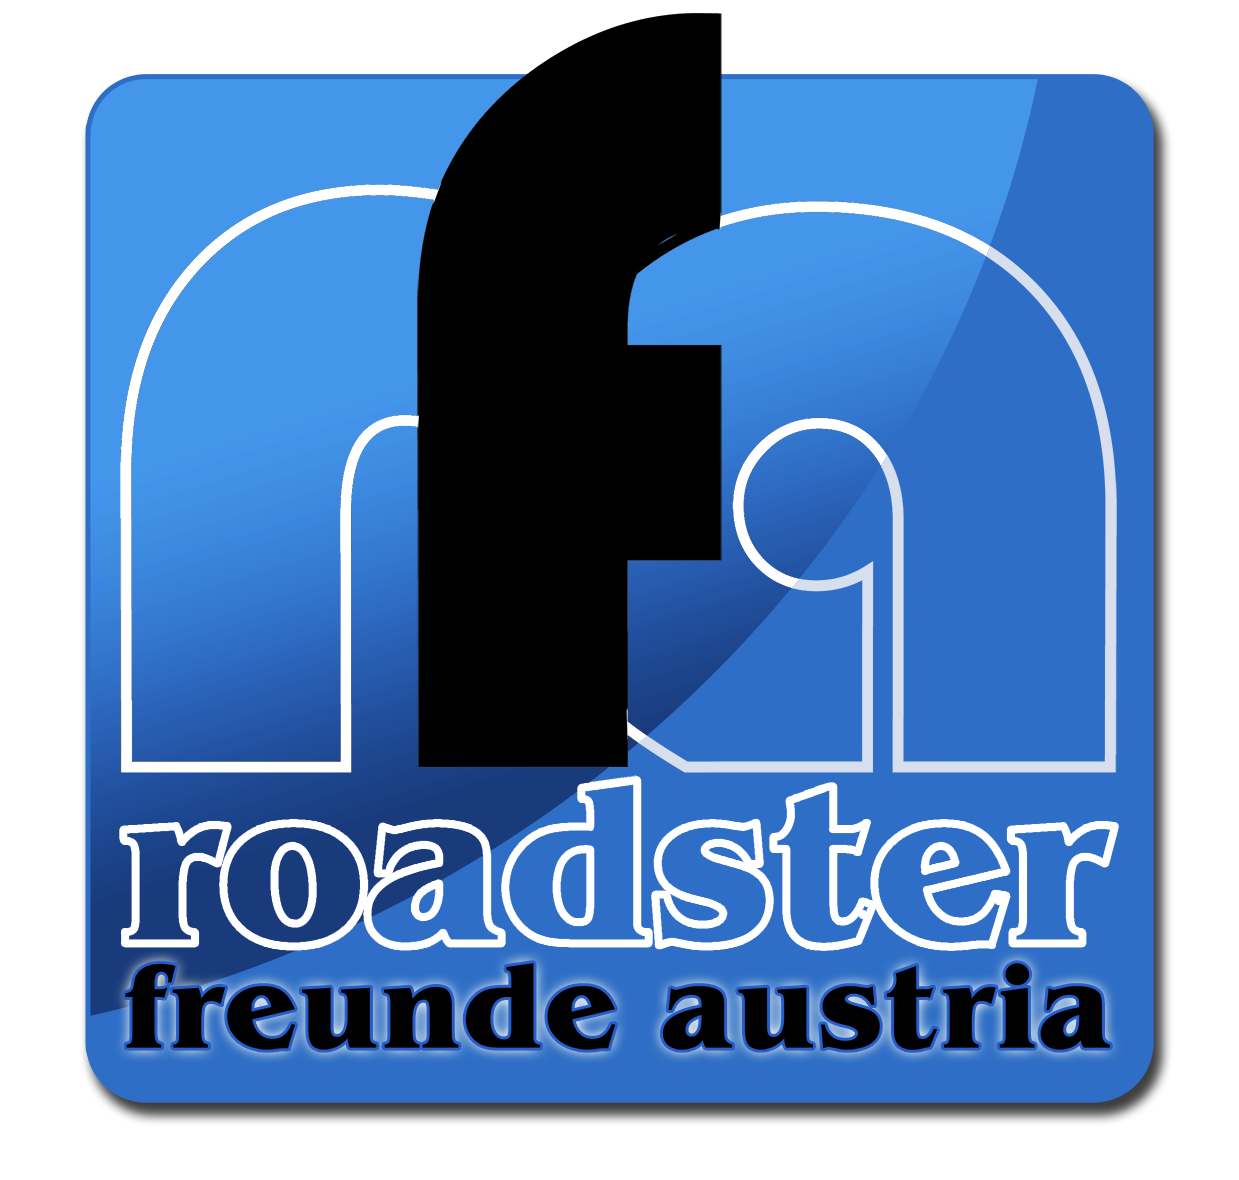 Roadsterfreunde Austria